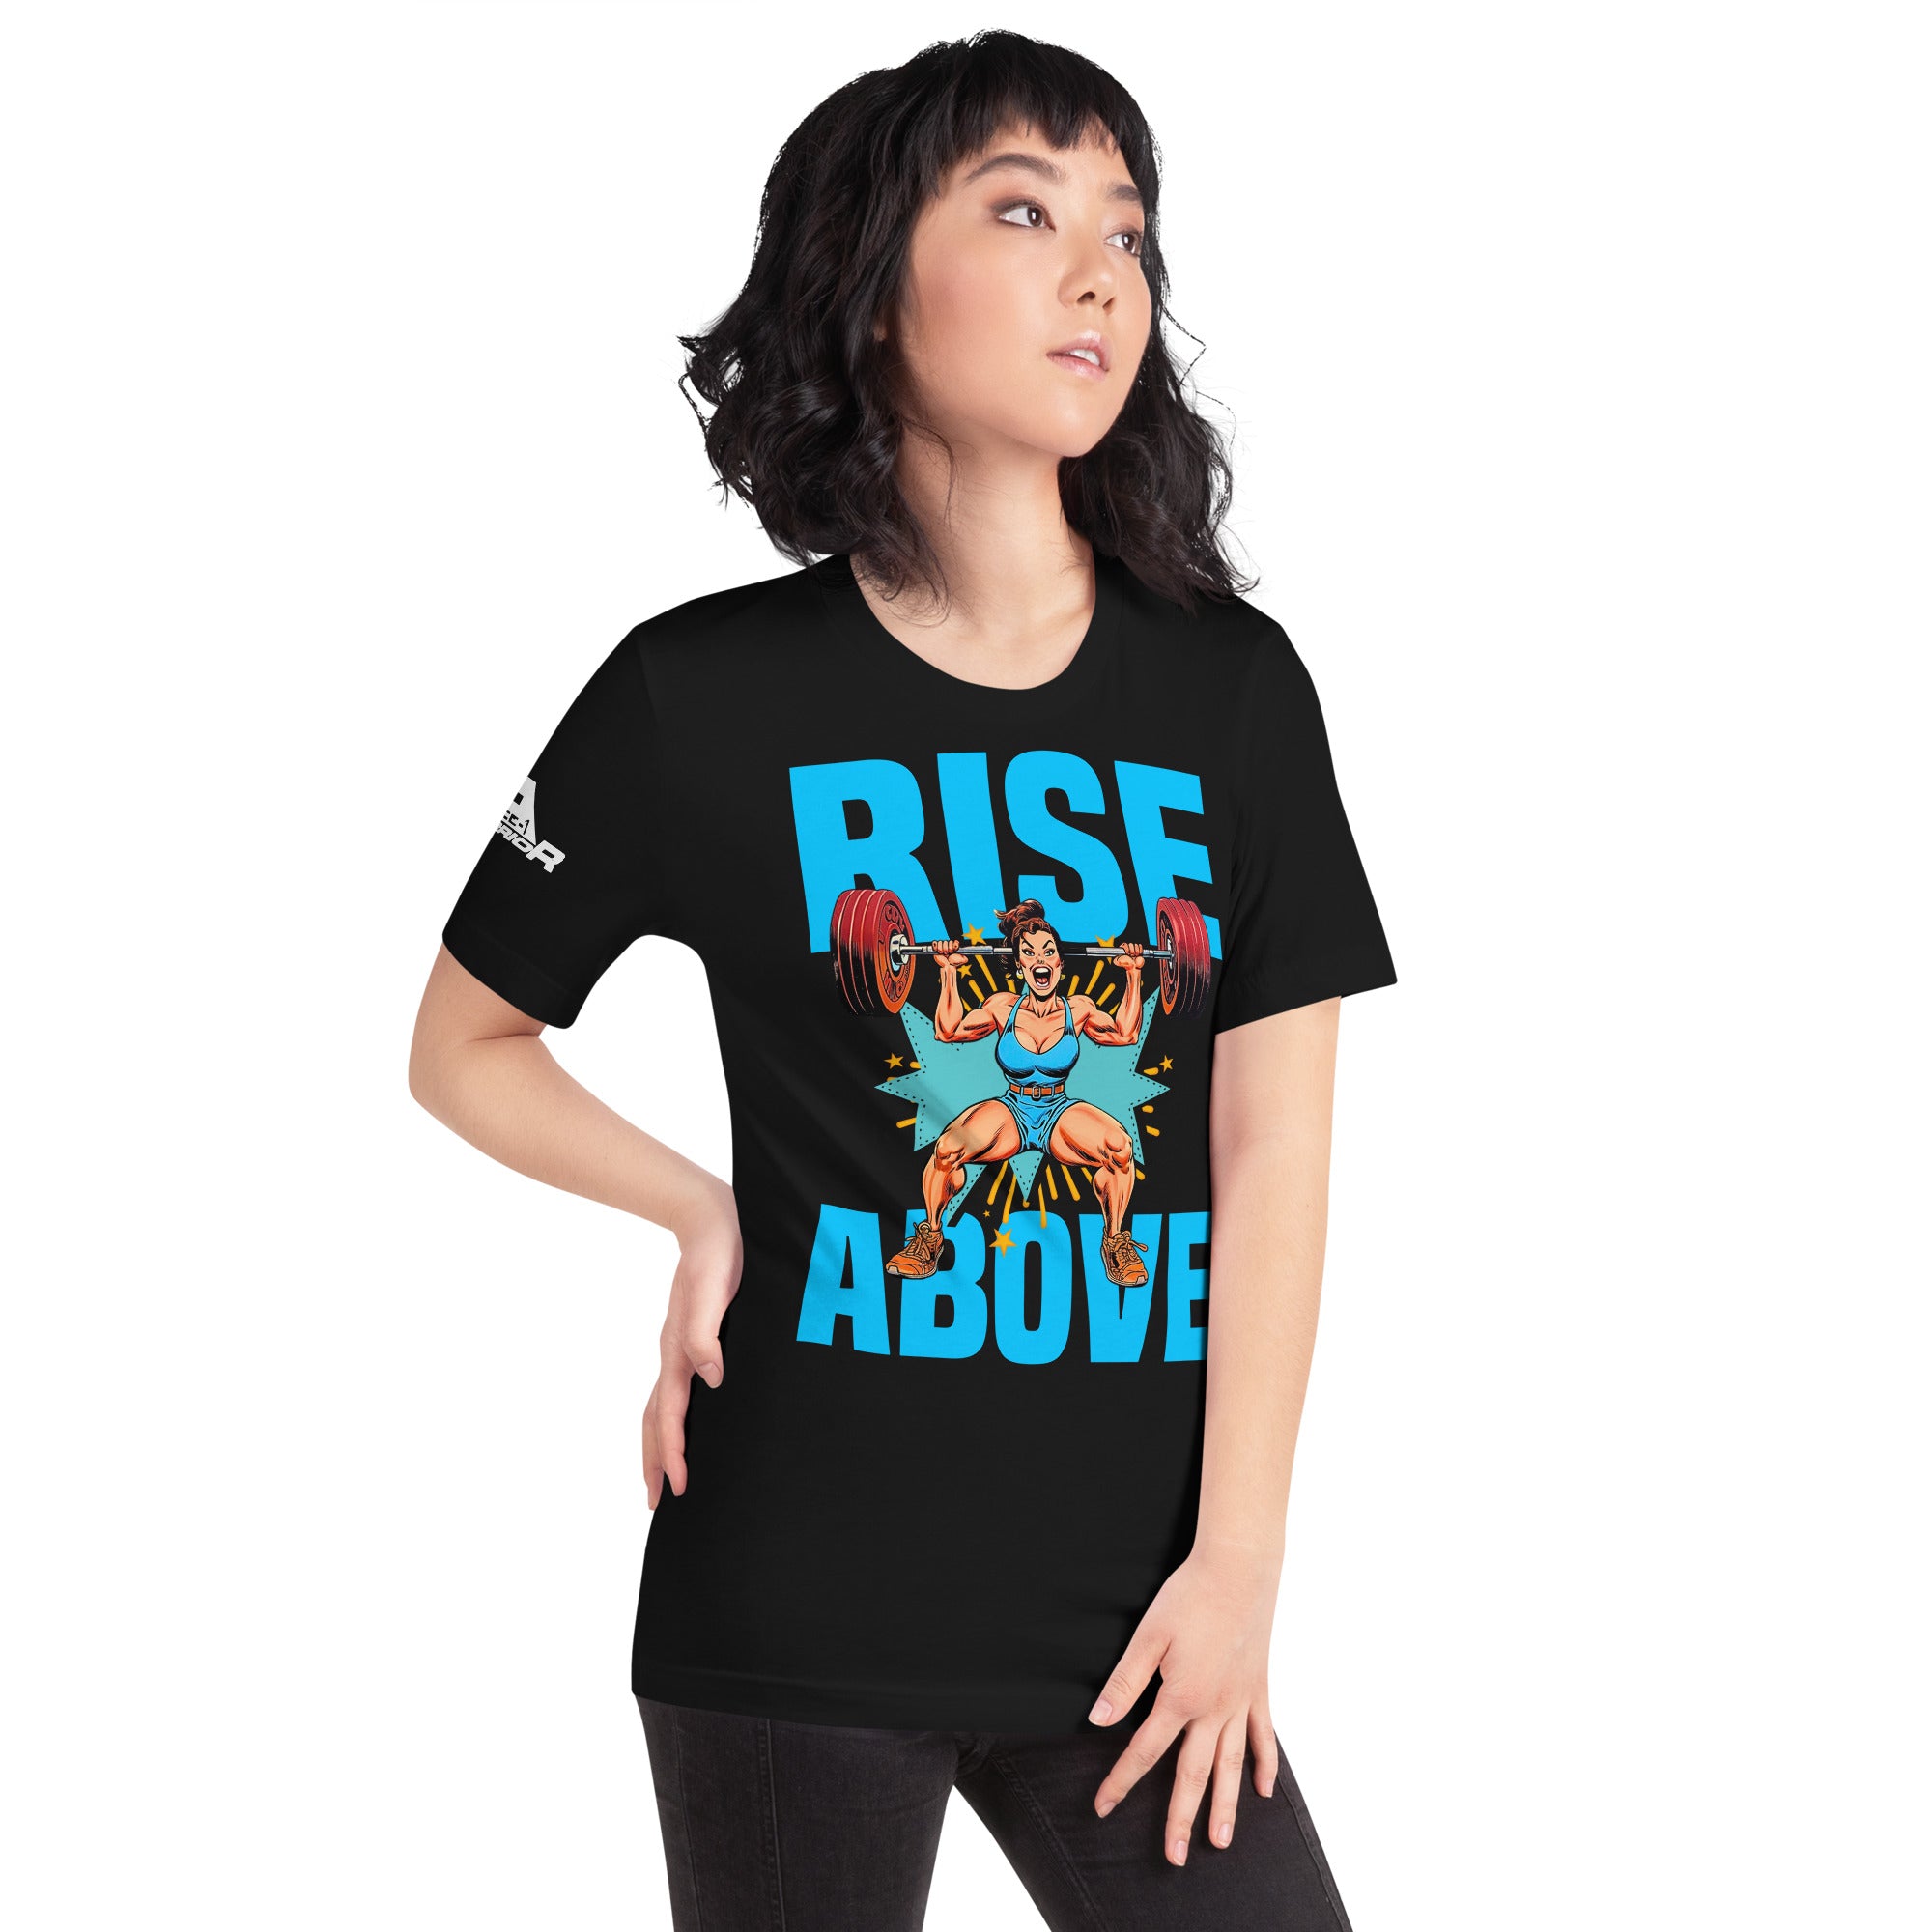 Women's Empowered "Rise Above" Unisex t-shirt